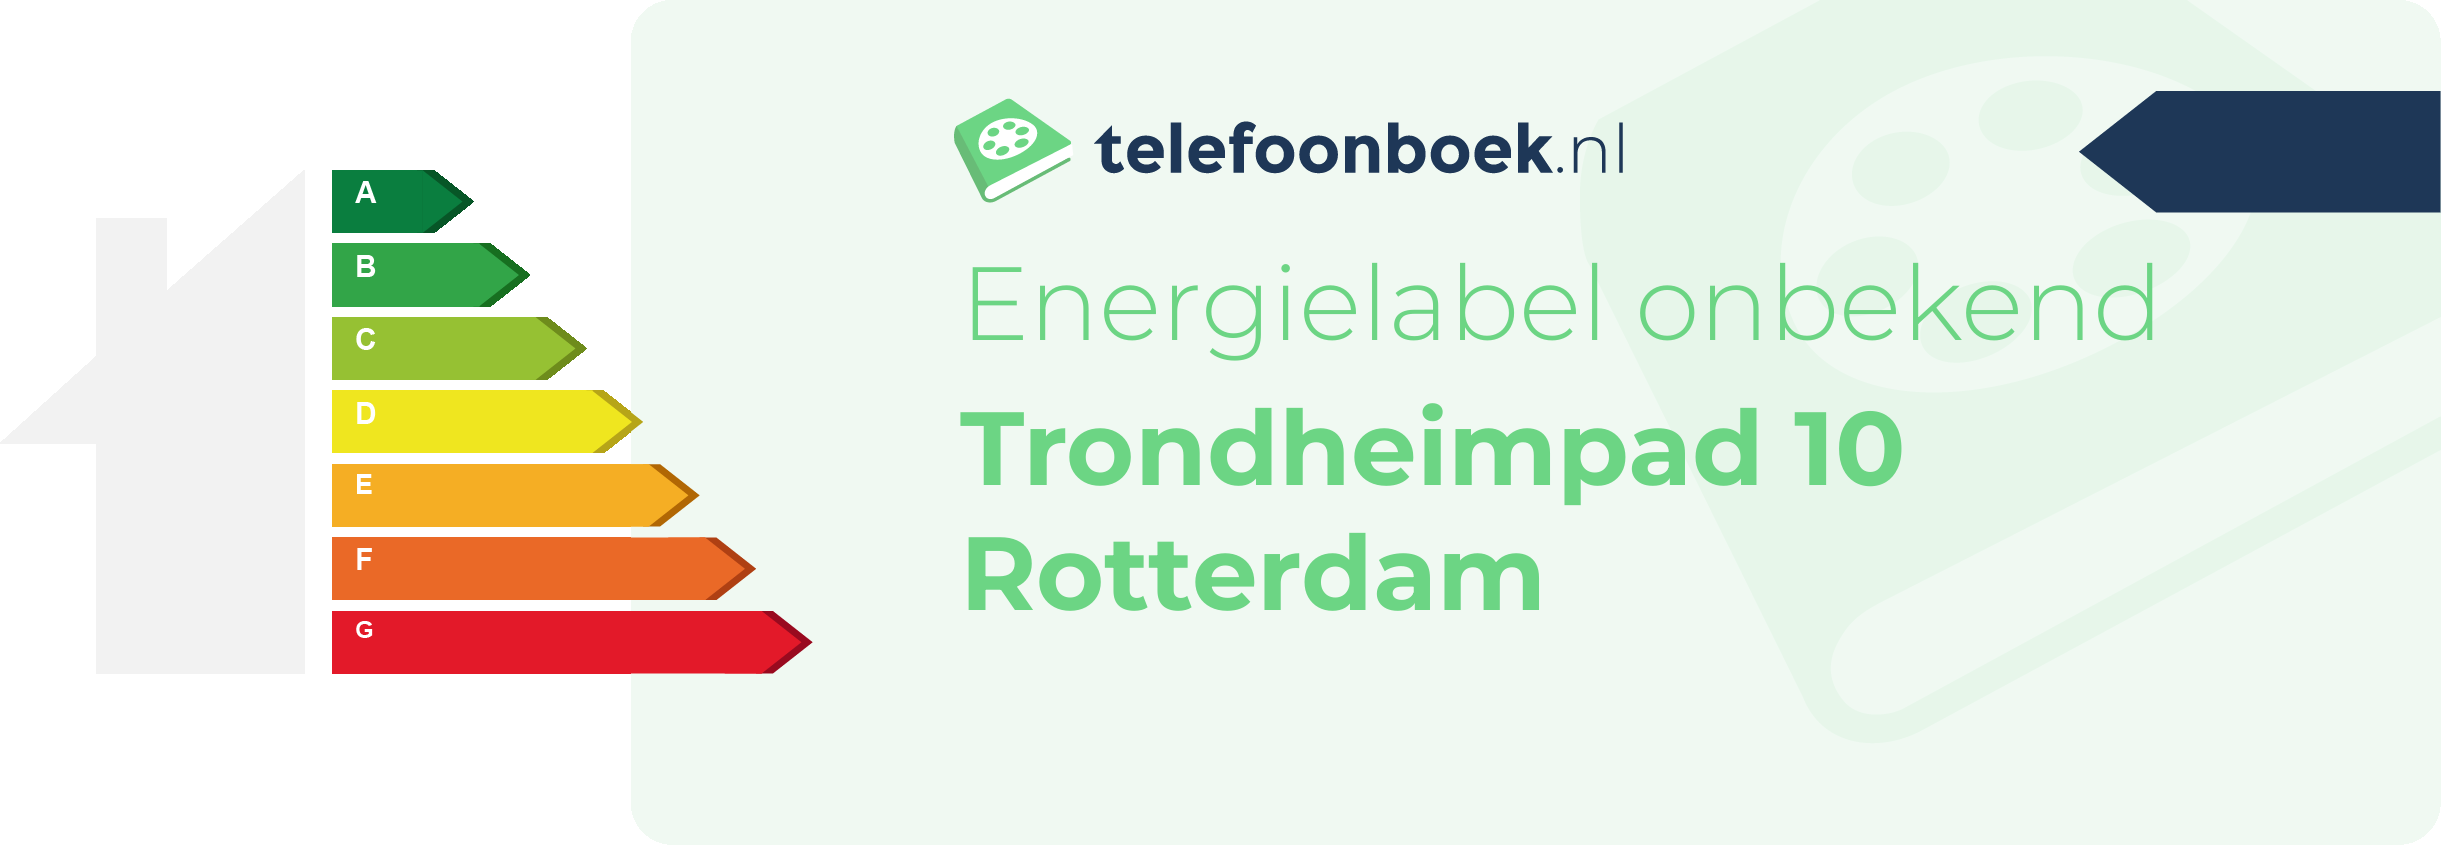 Energielabel Trondheimpad 10 Rotterdam